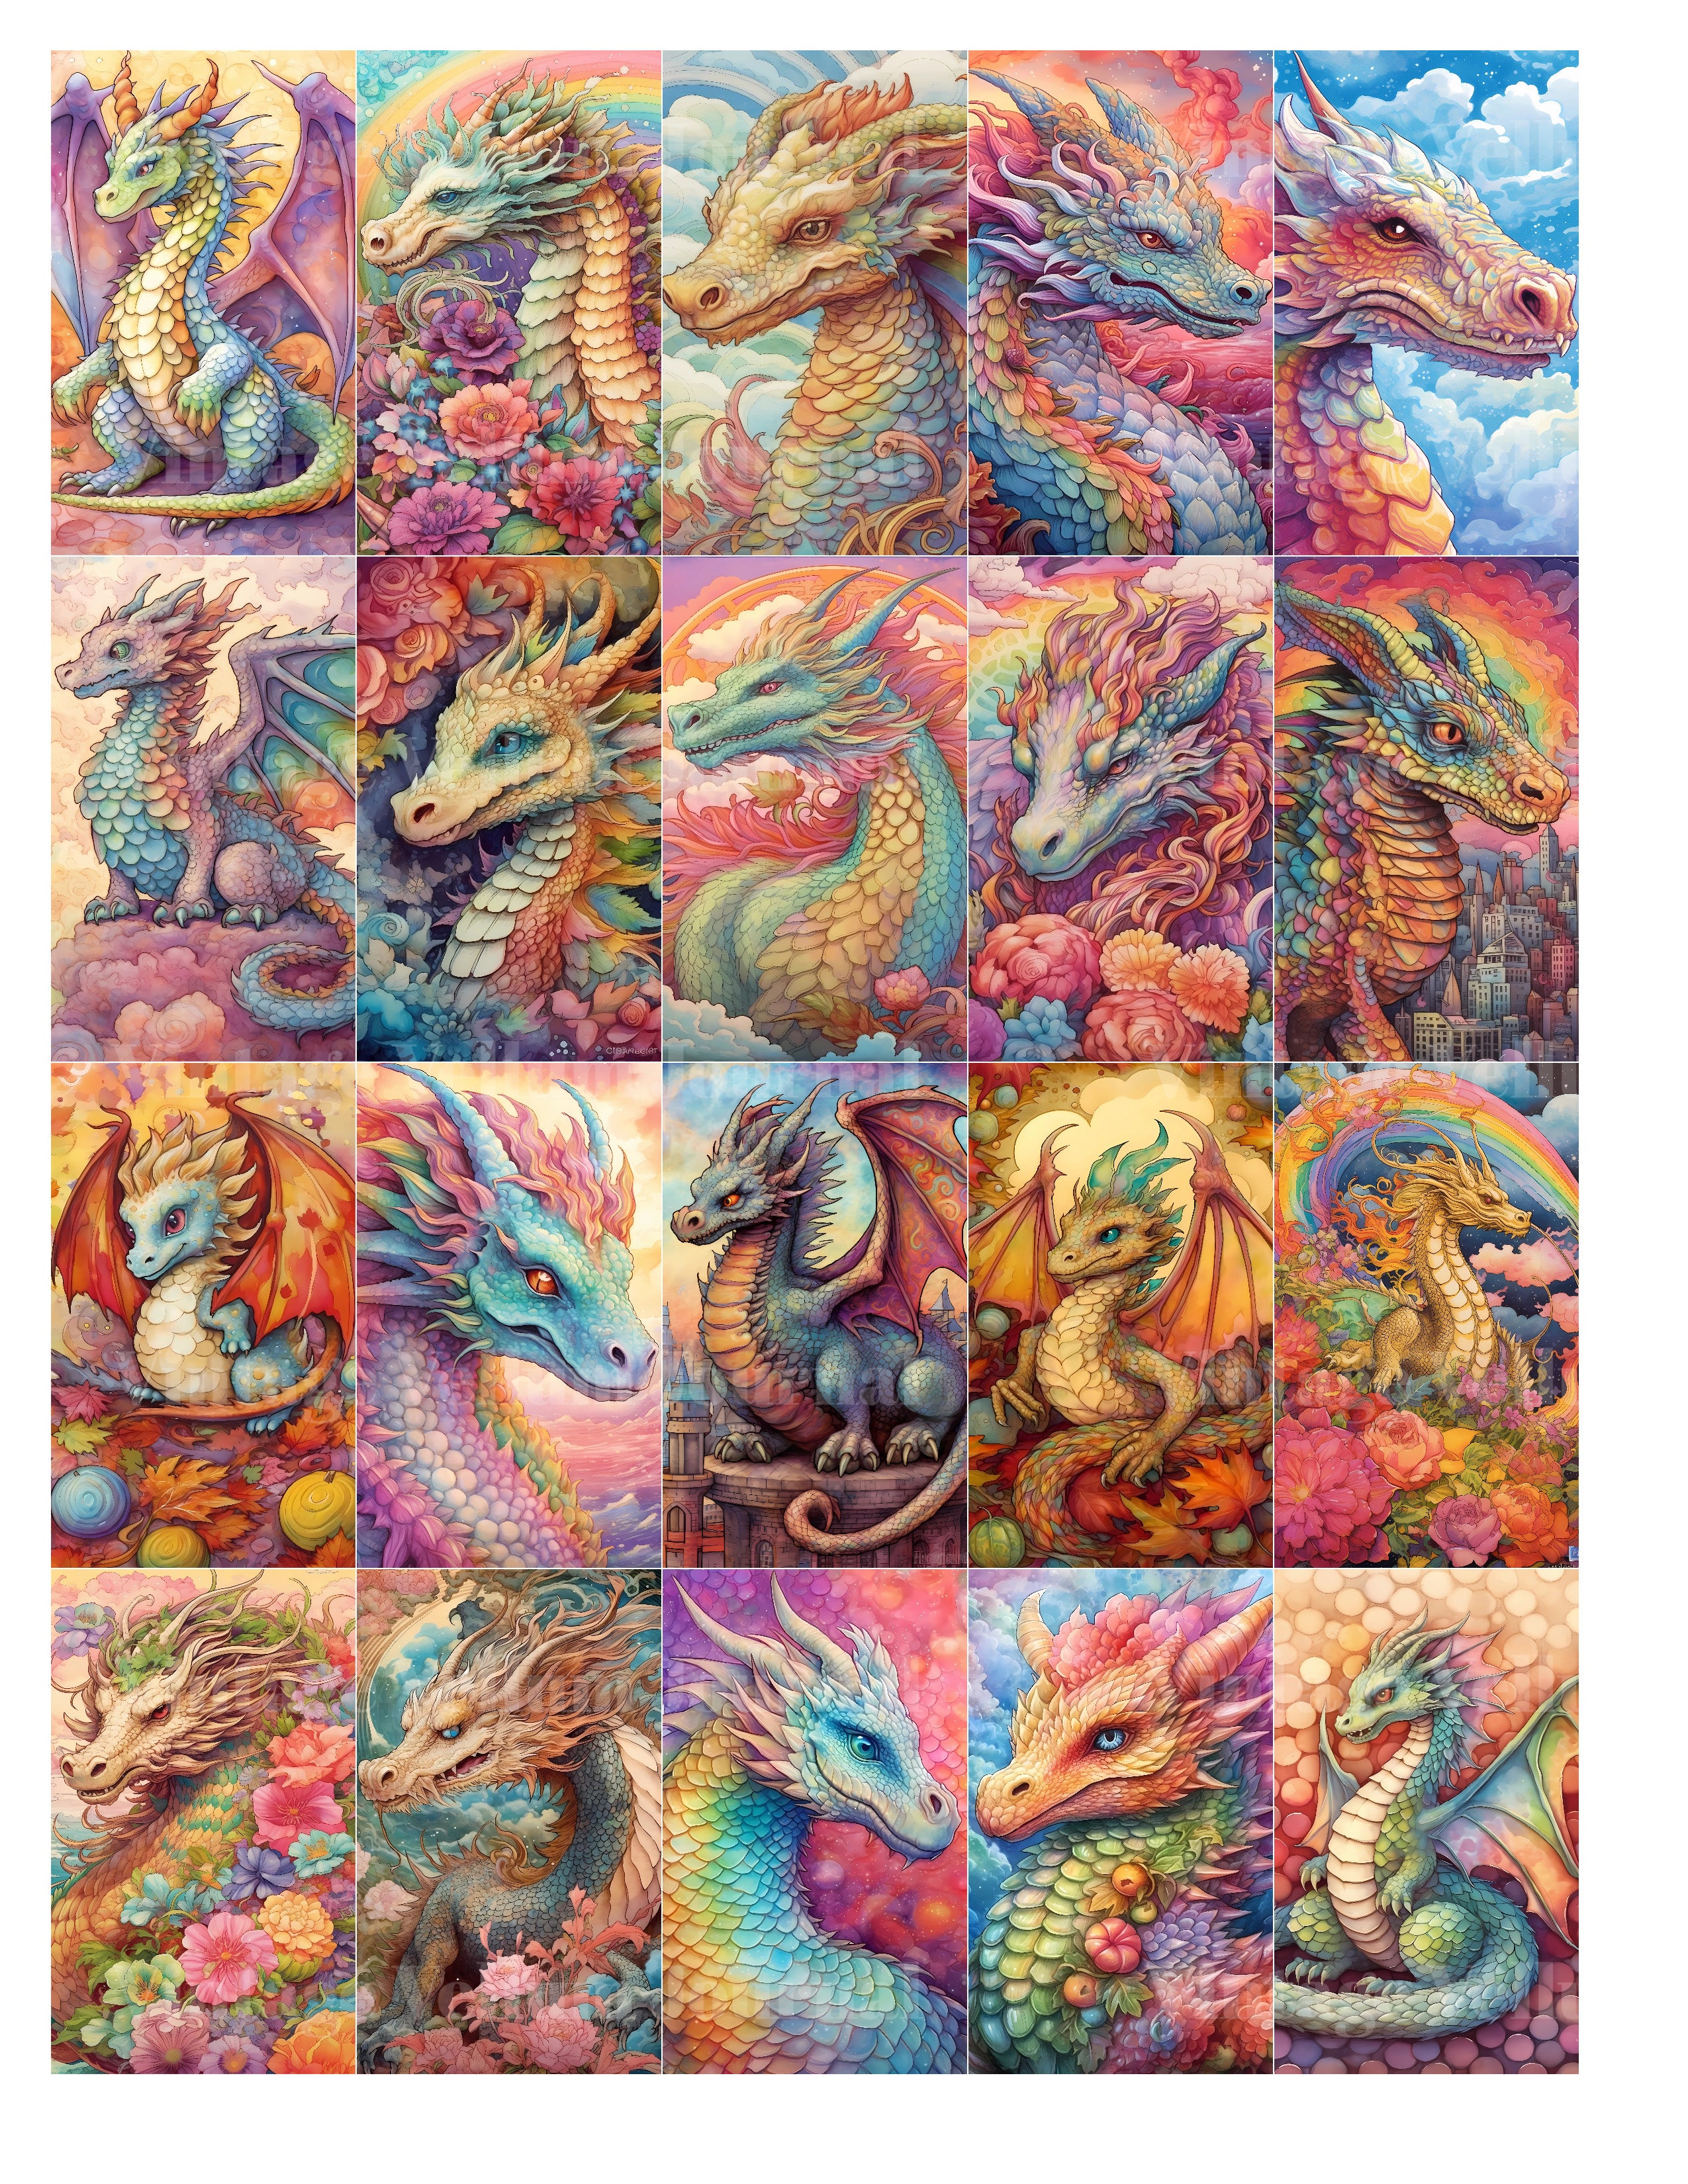 Rainbow Dragon Junk Journal Pages - CraftNest